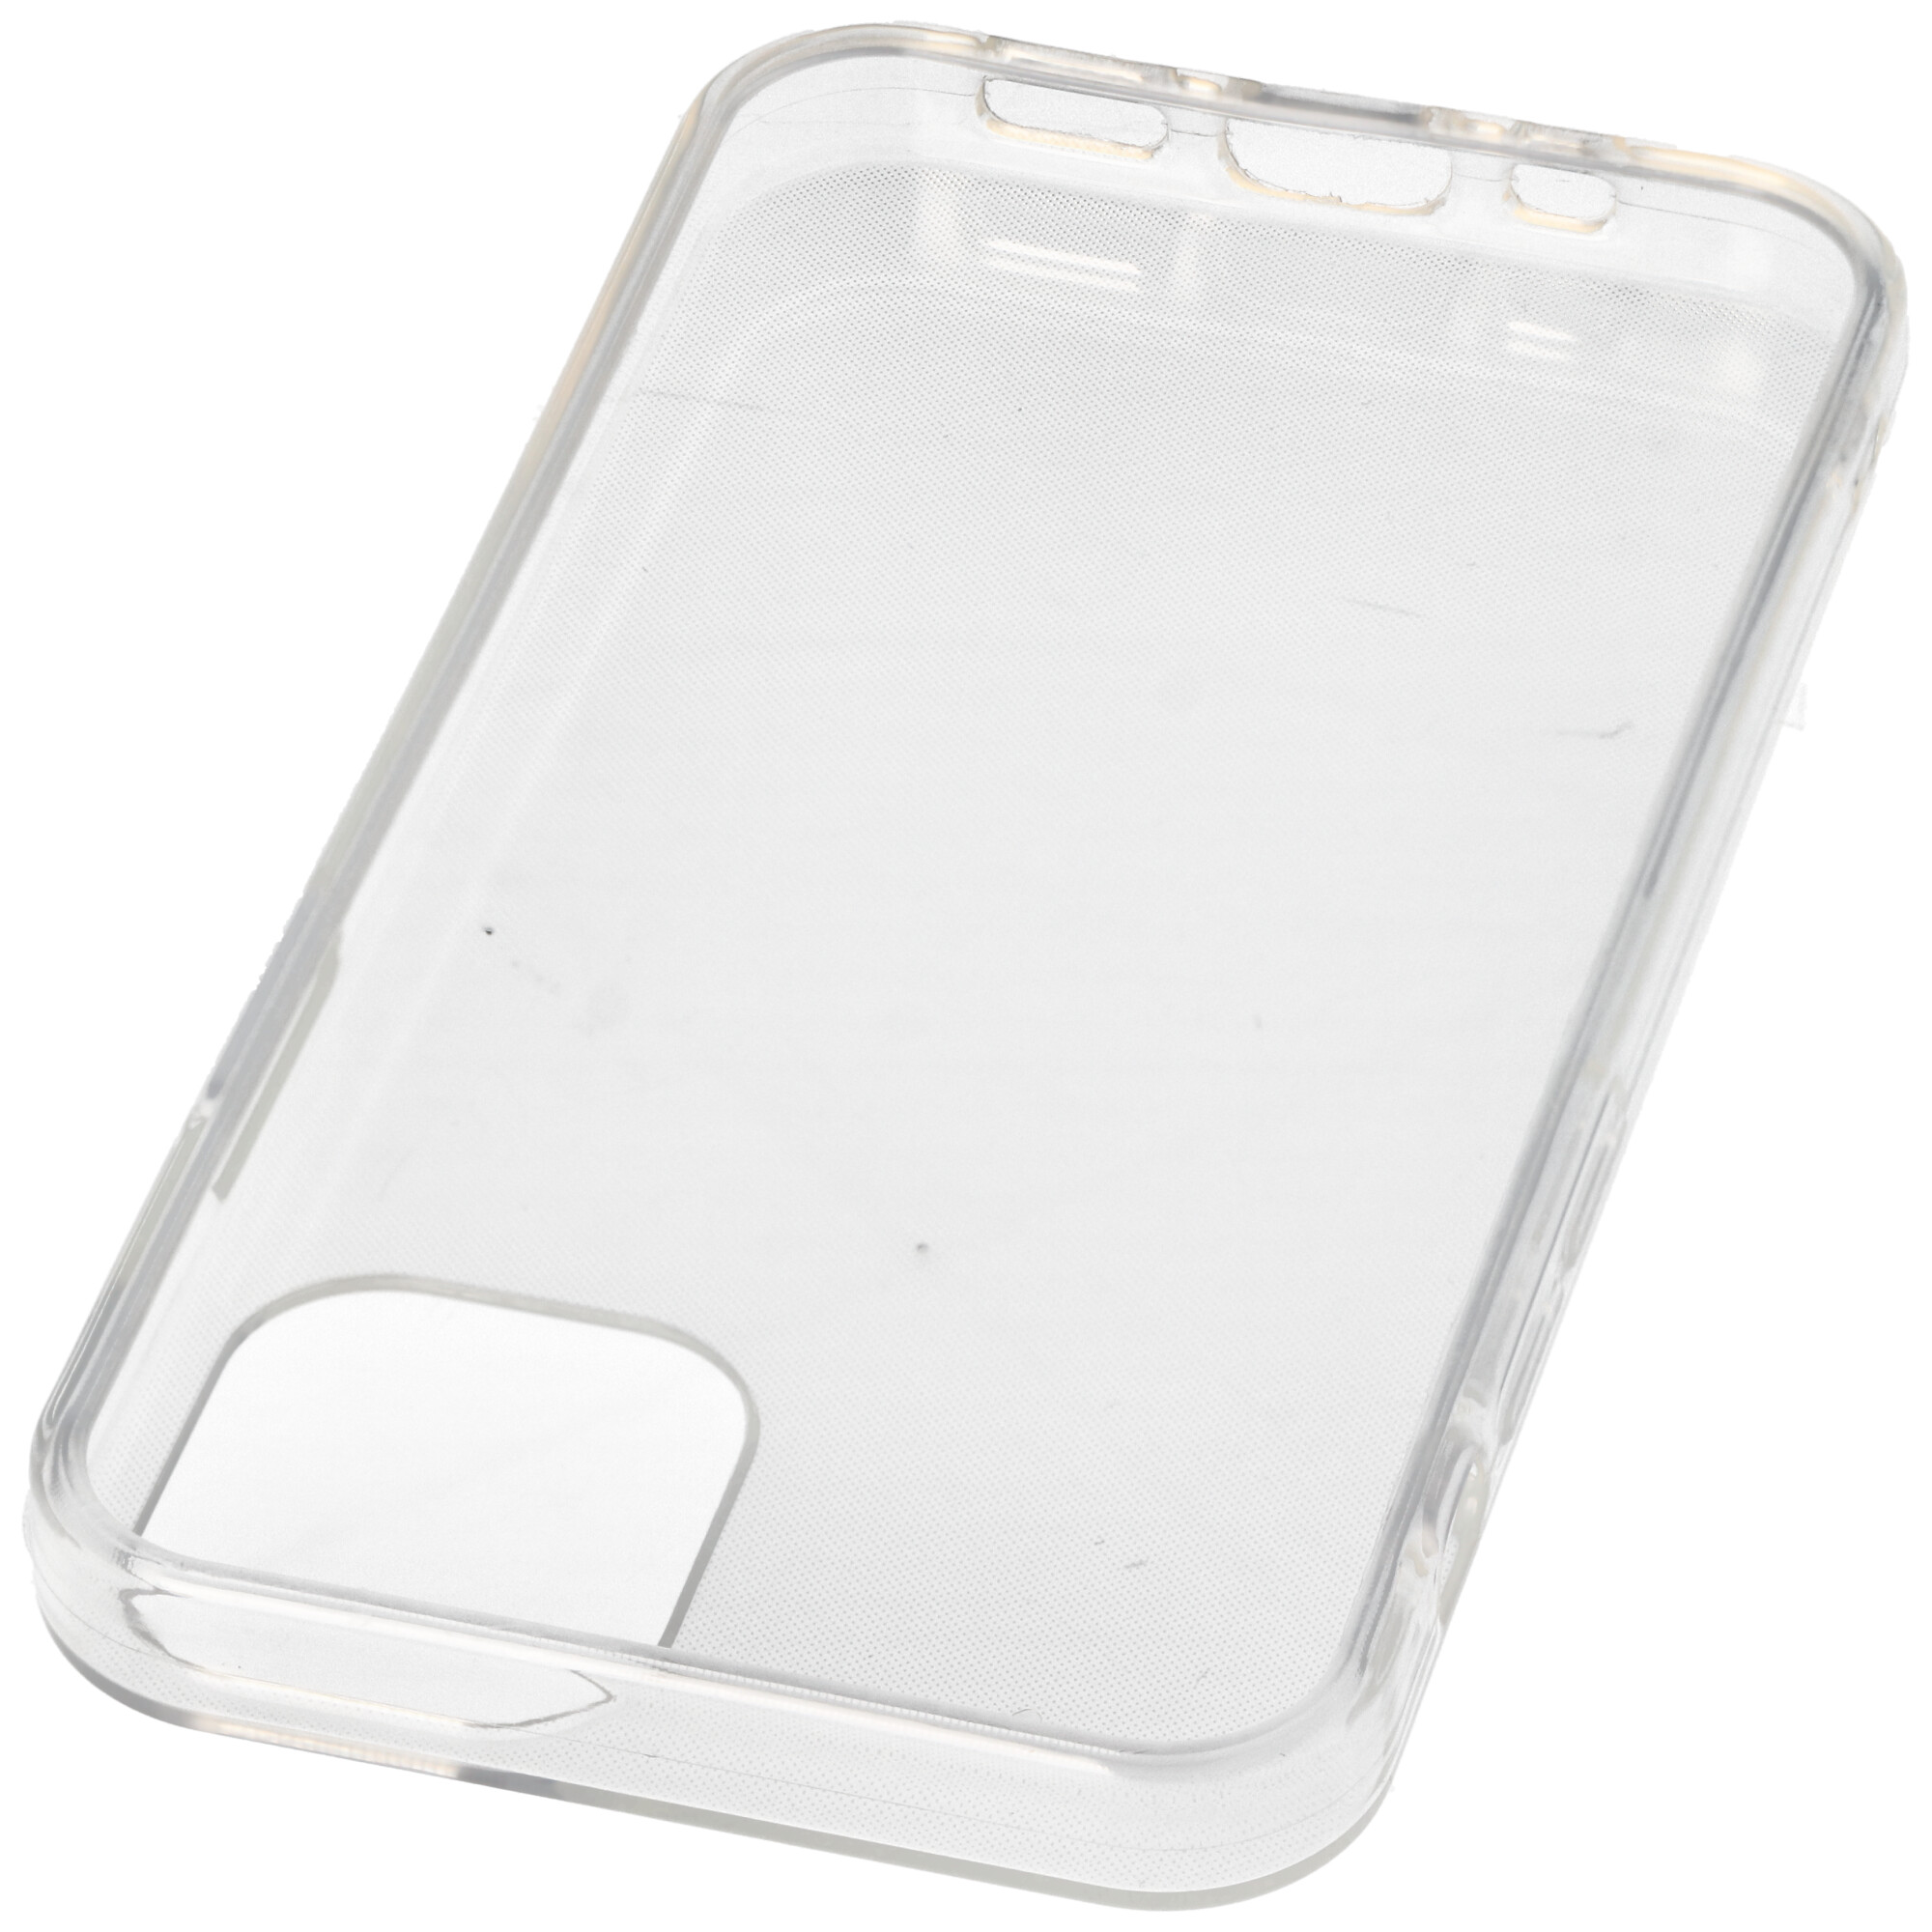 Hülle passend für Apple iPhone 12 Mini 5,4 Zoll - transparente Schutzhülle, Anti-Gelb Luftkissen Fallschutz Silikon Handyhülle robustes TPU Case